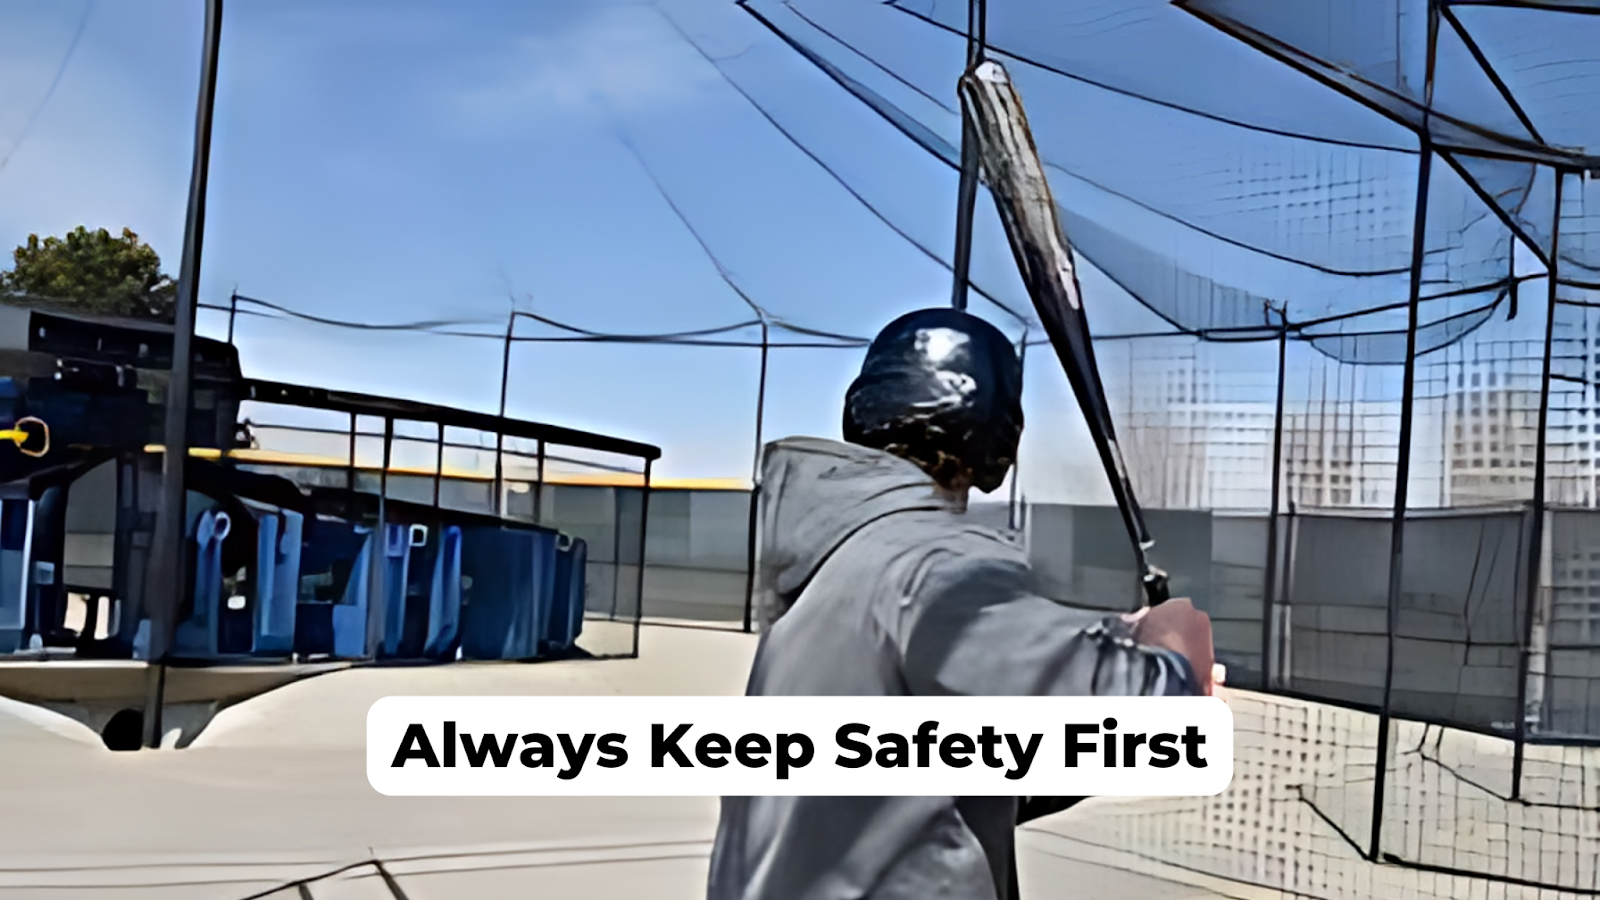 A baseball player wearing helmet inside a backyard batting cage